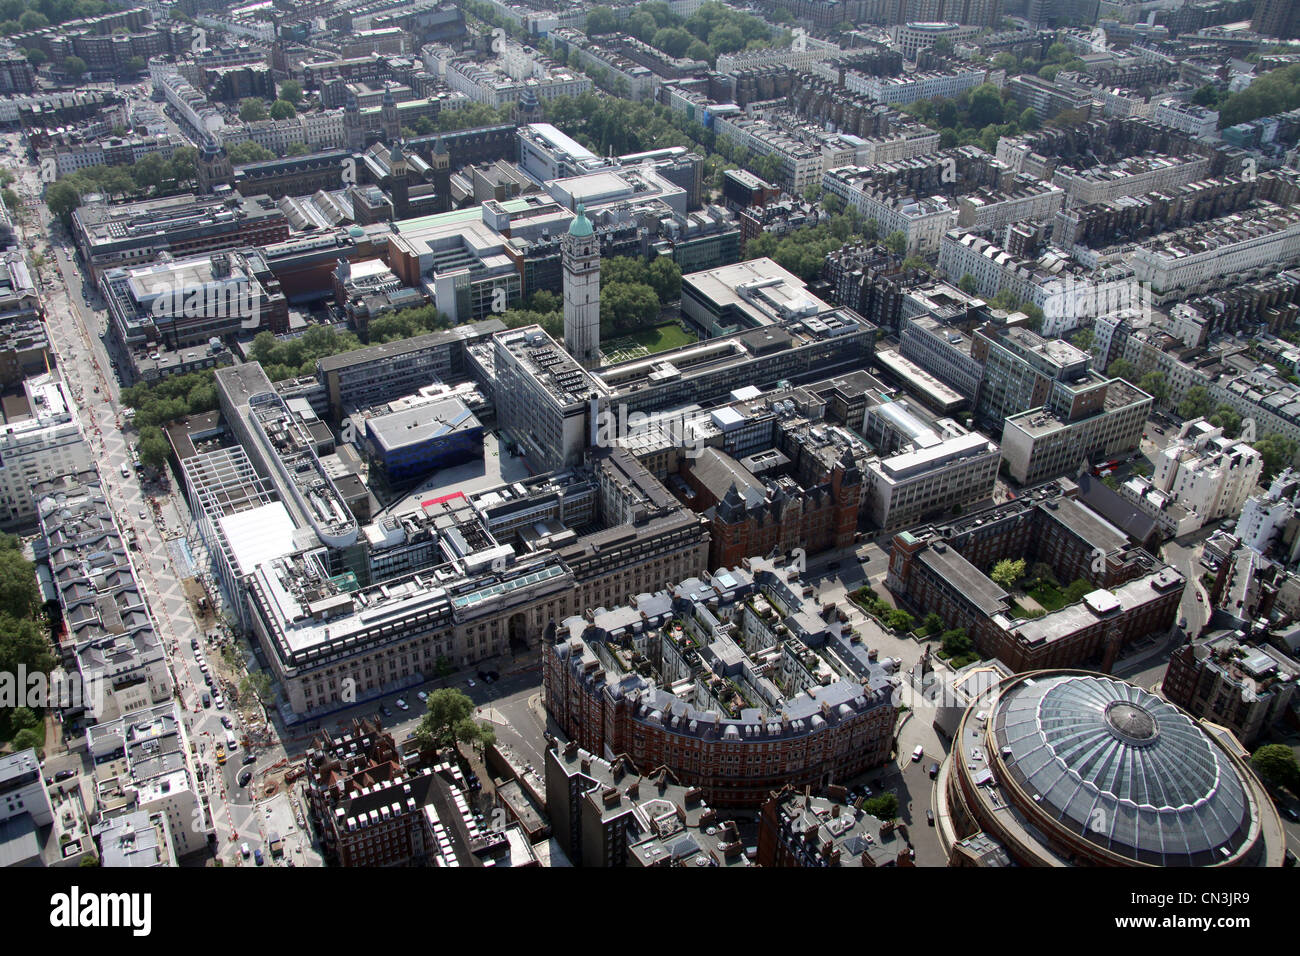 Vue aérienne de Knightsbridge. Albert Hall, Royal College of Music, Imperial College, le Science Museum, Londres SW7. Banque D'Images